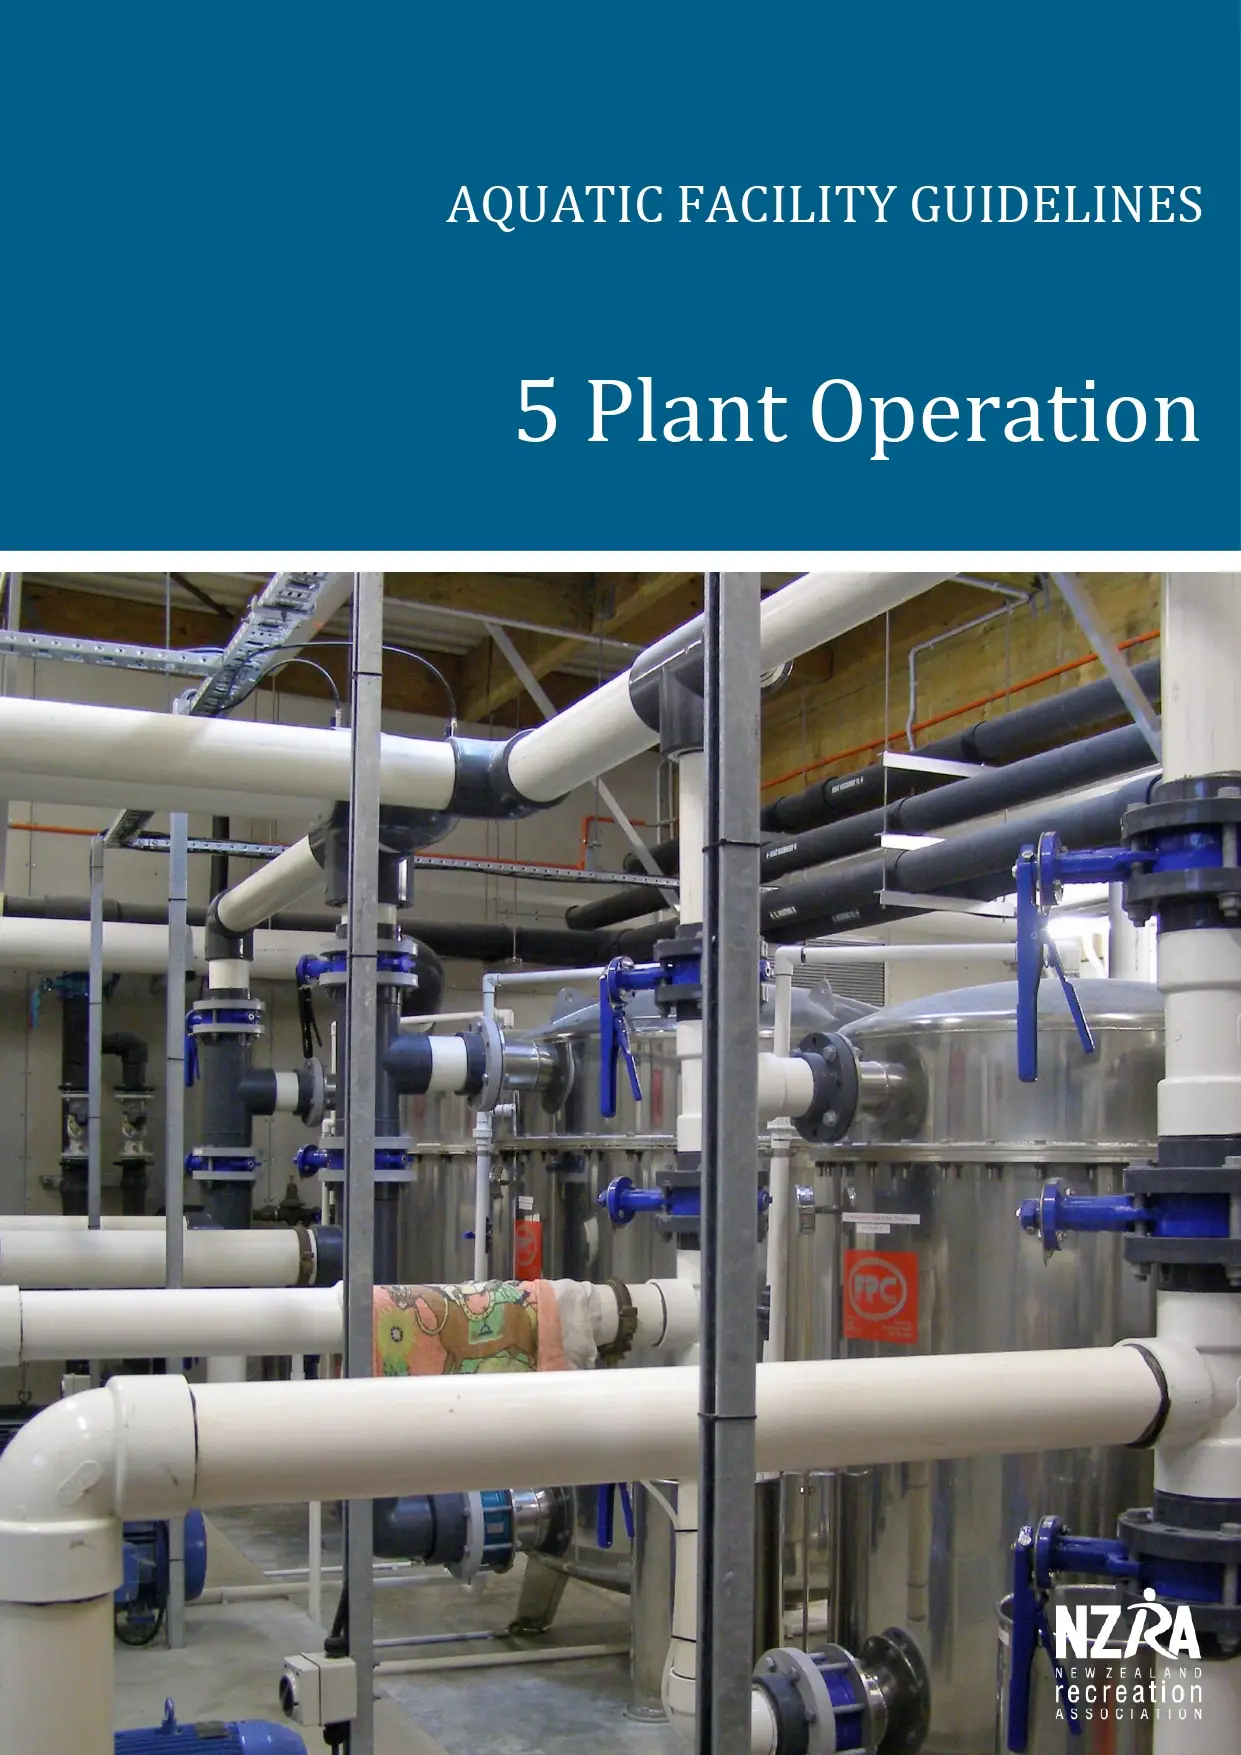 Aquatic Facility Guidelines 5 Plant Operation